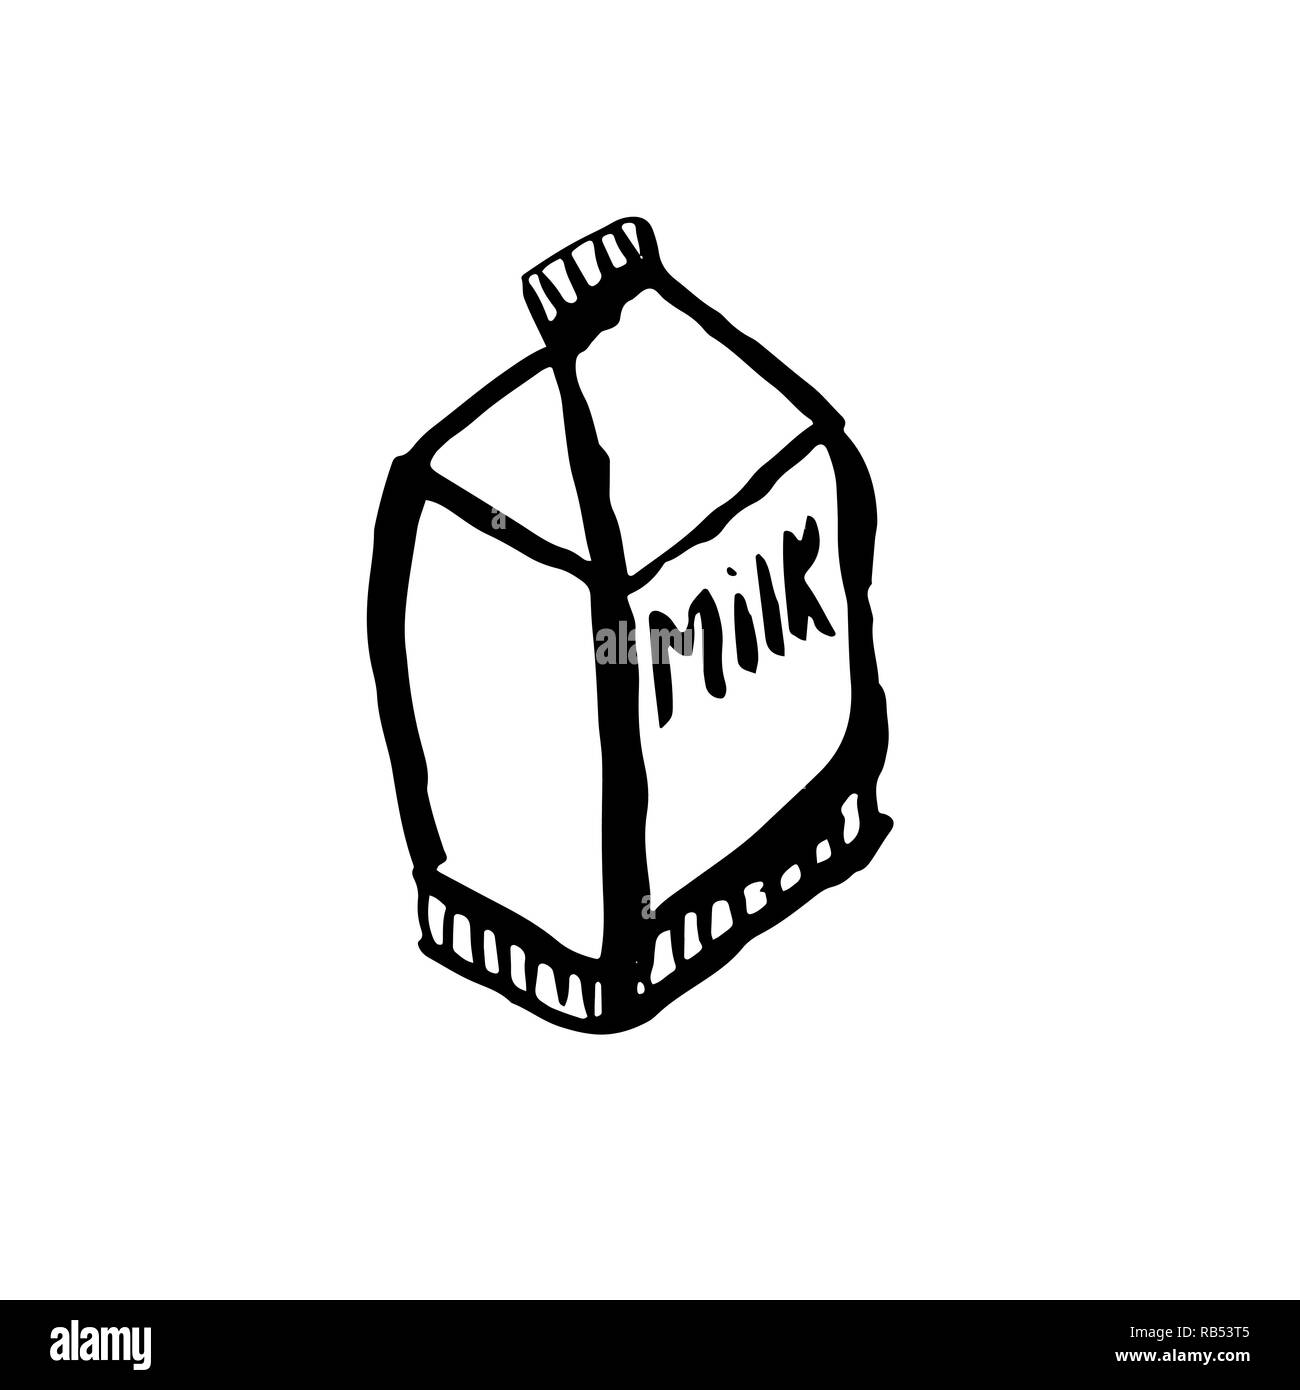 Milk pack grunge icon. Vector hand drawn illustration Stock Vector